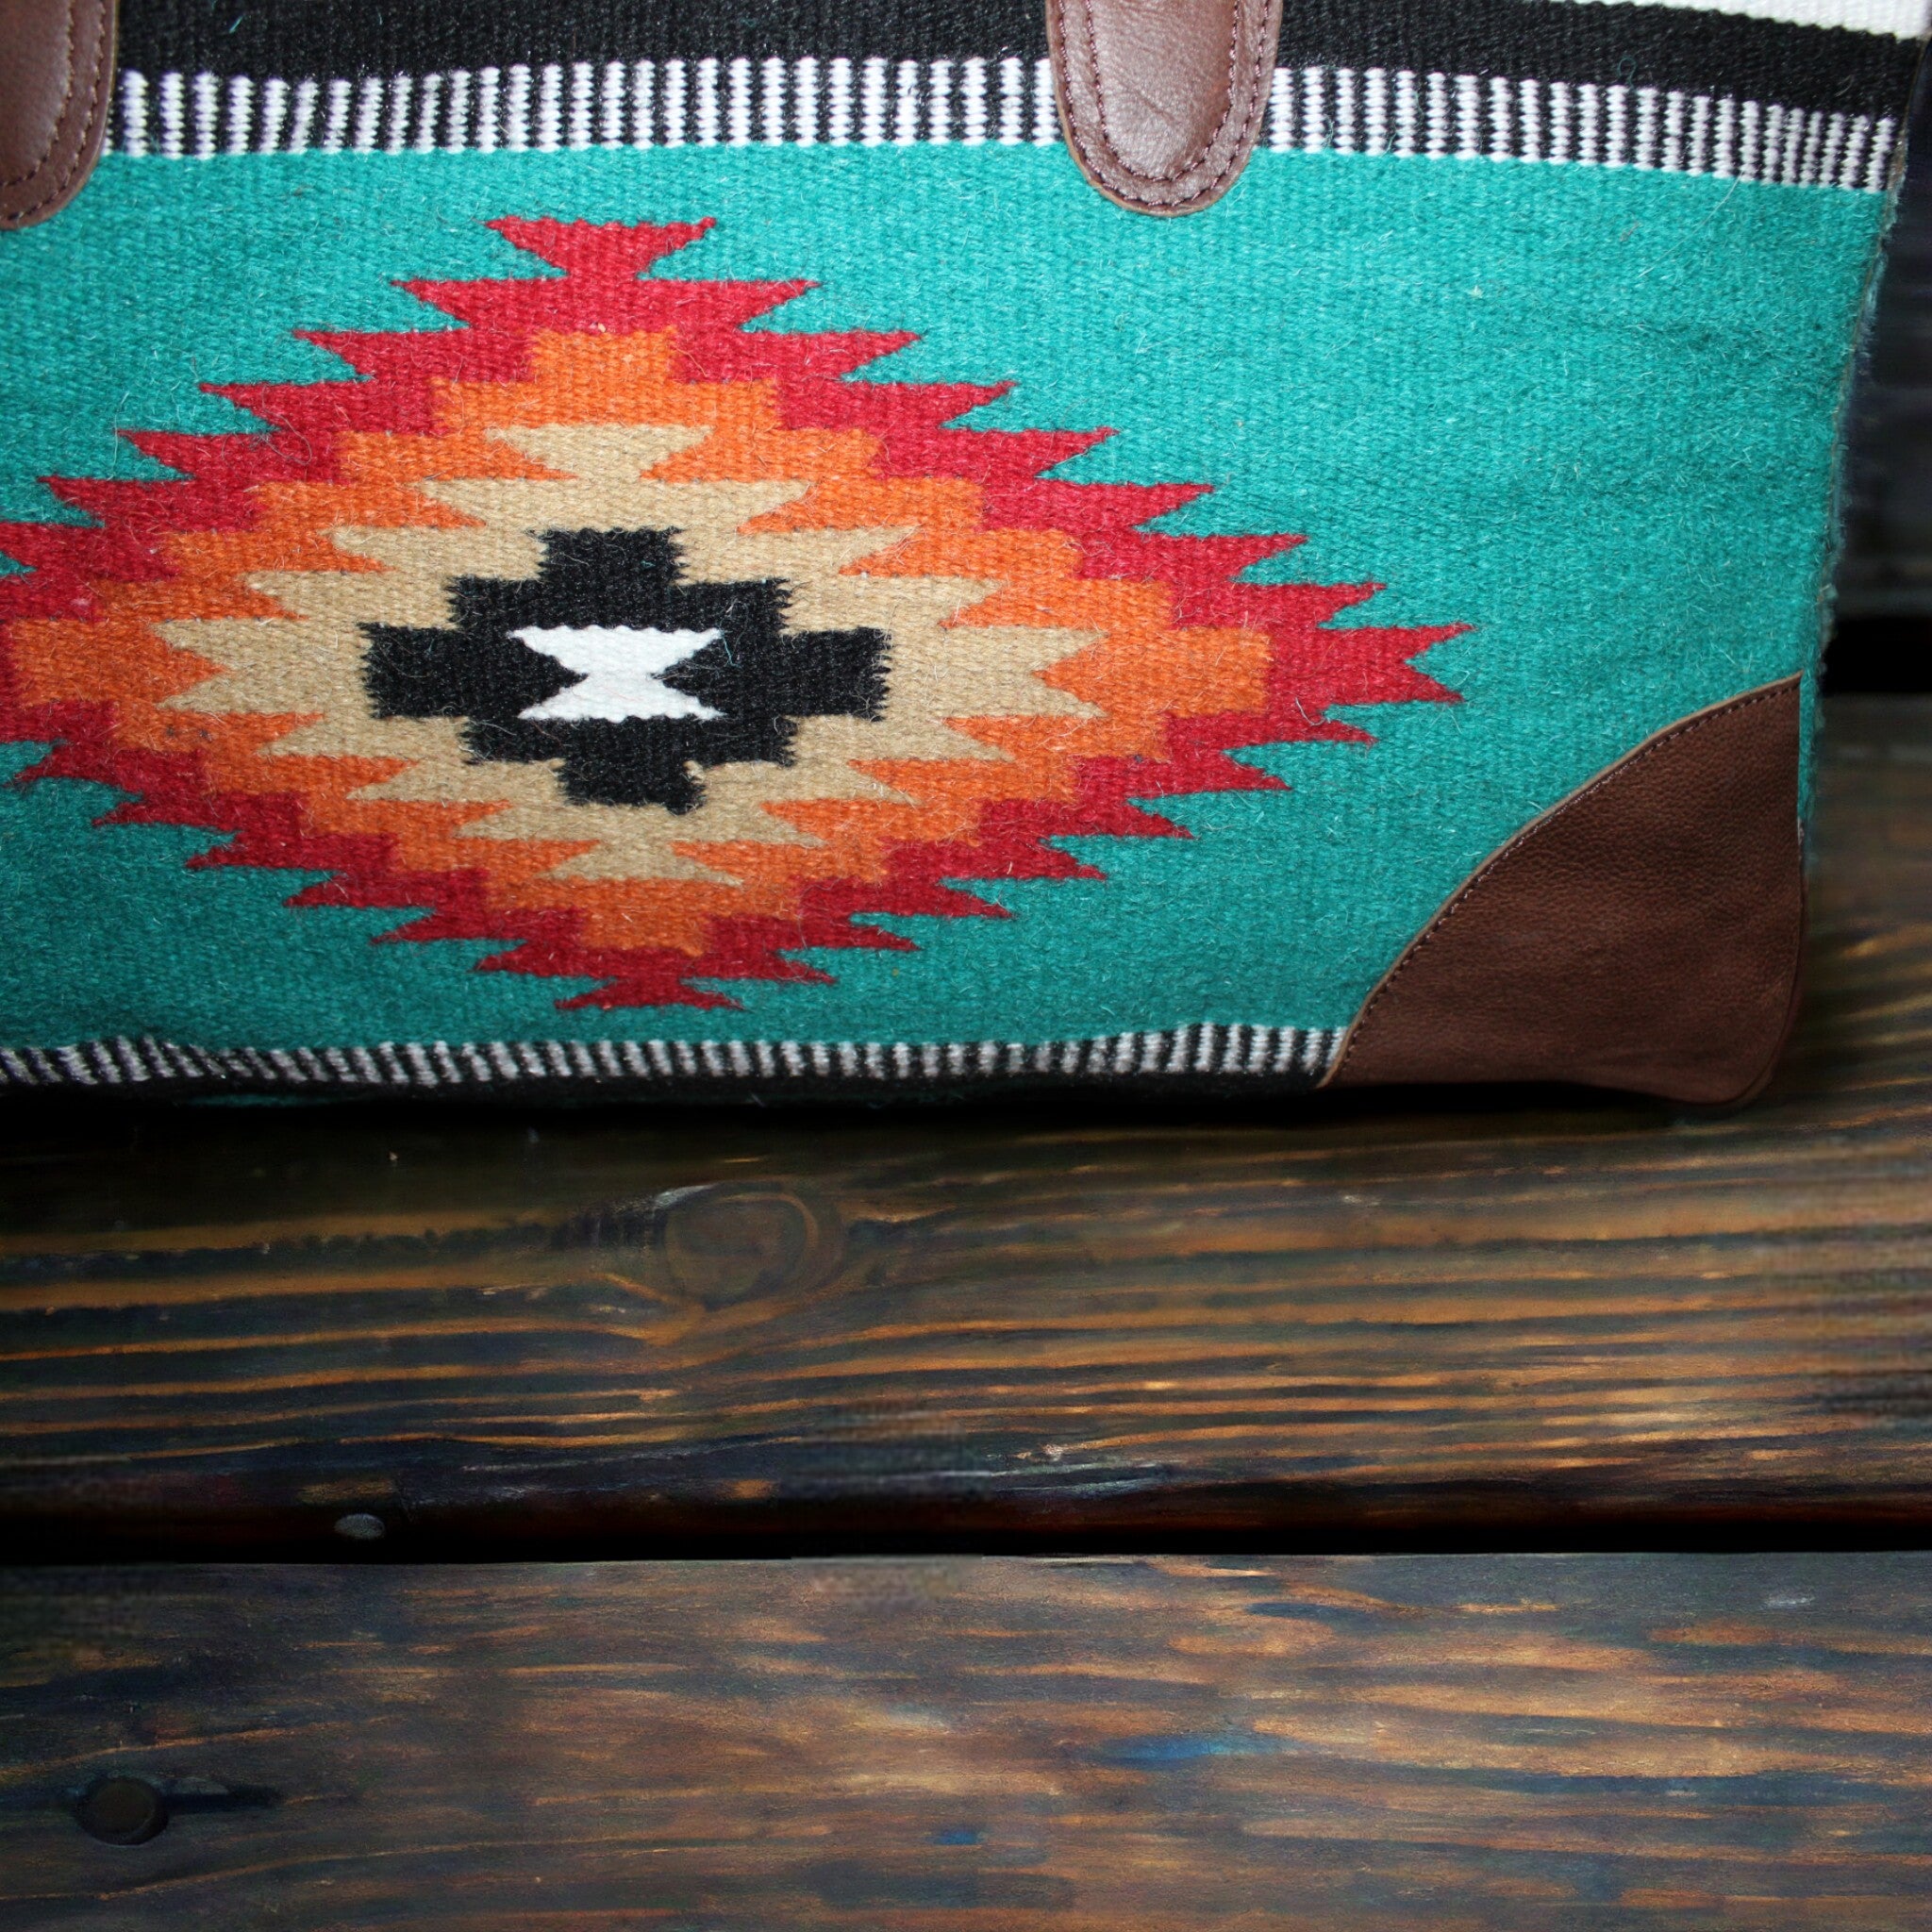 Aztec Large Weekender Southwestern Duffel Bag Kelsey Saddle Blanket Bag 100% Leather Handles